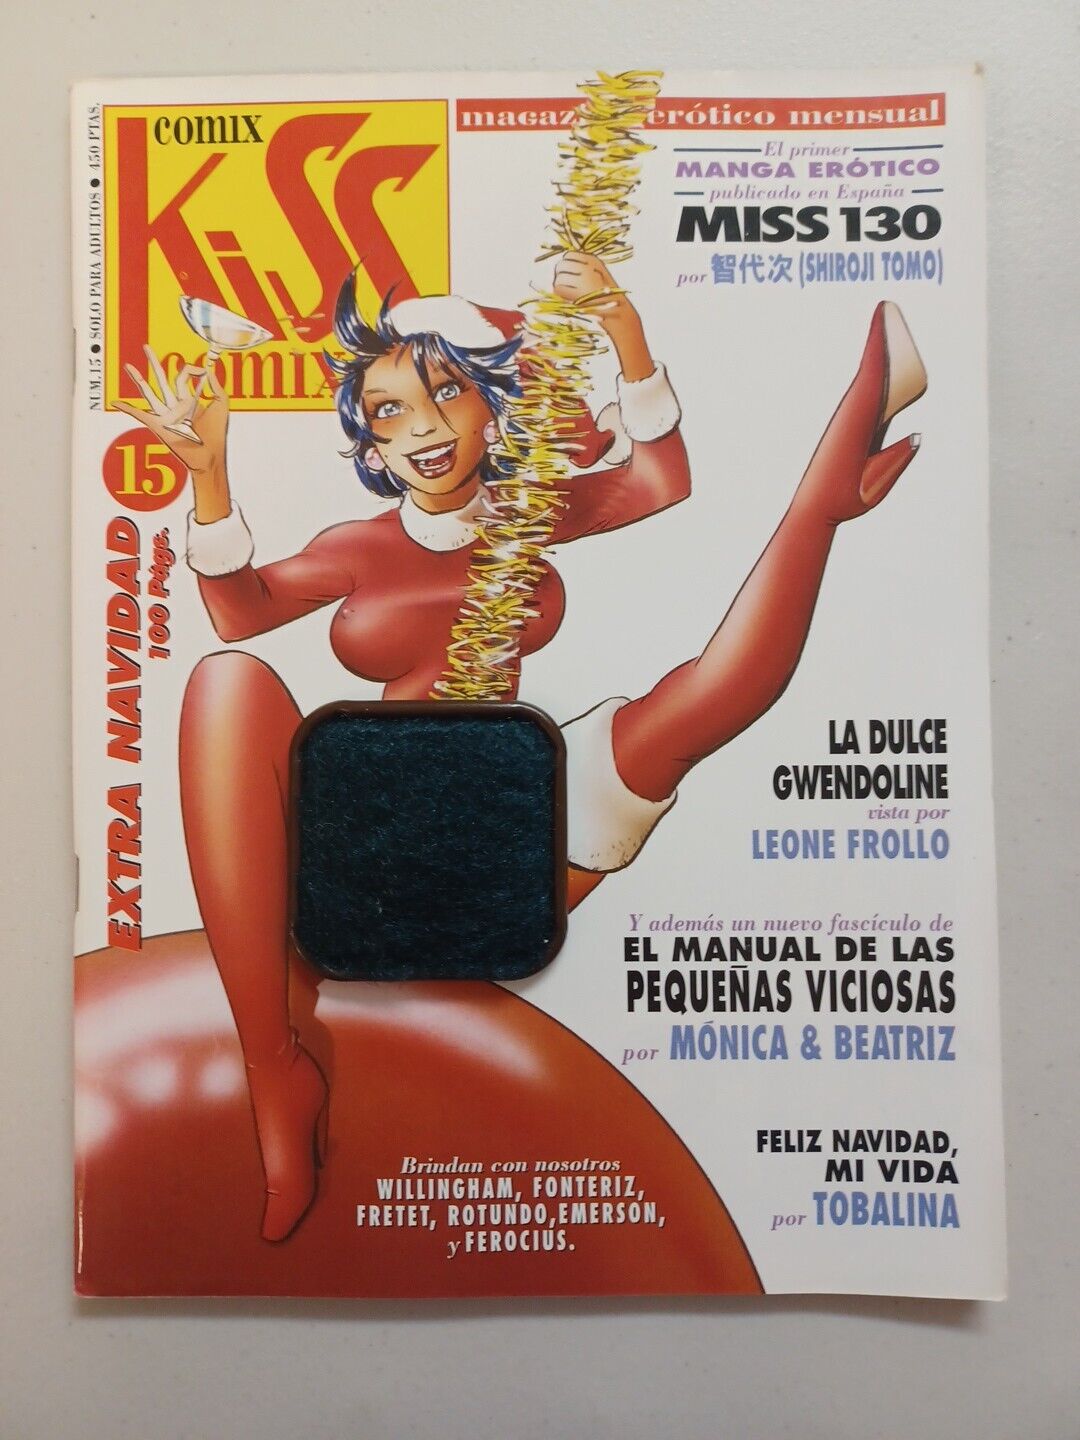  Kiss Comix Spanish  # 15